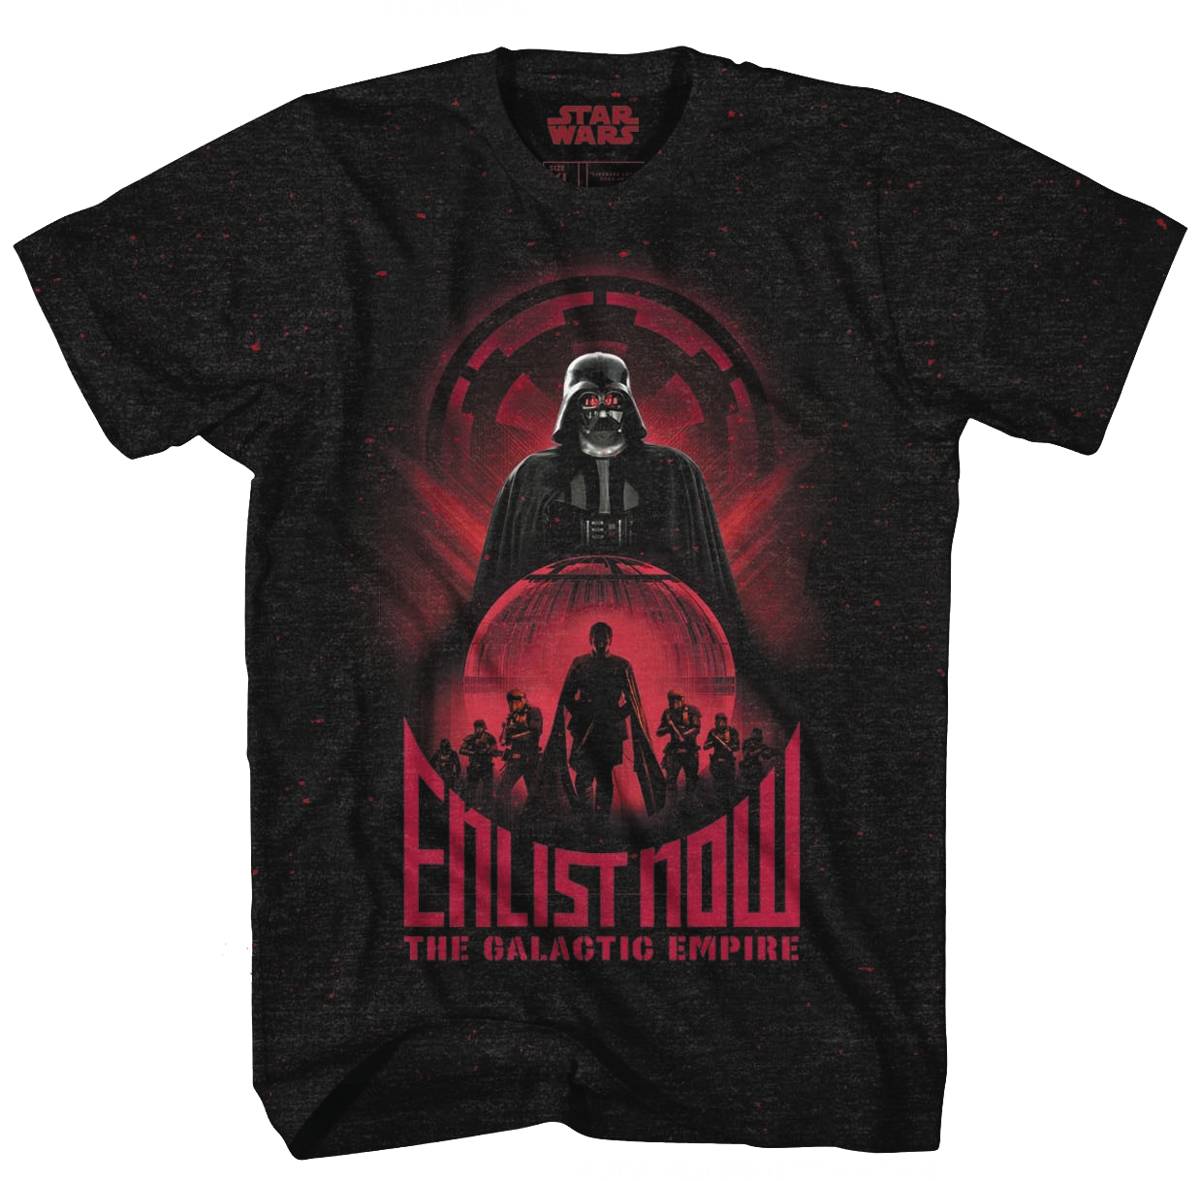 Star Wars Enlist Gid Blk/red Confetti T-Shirt Small